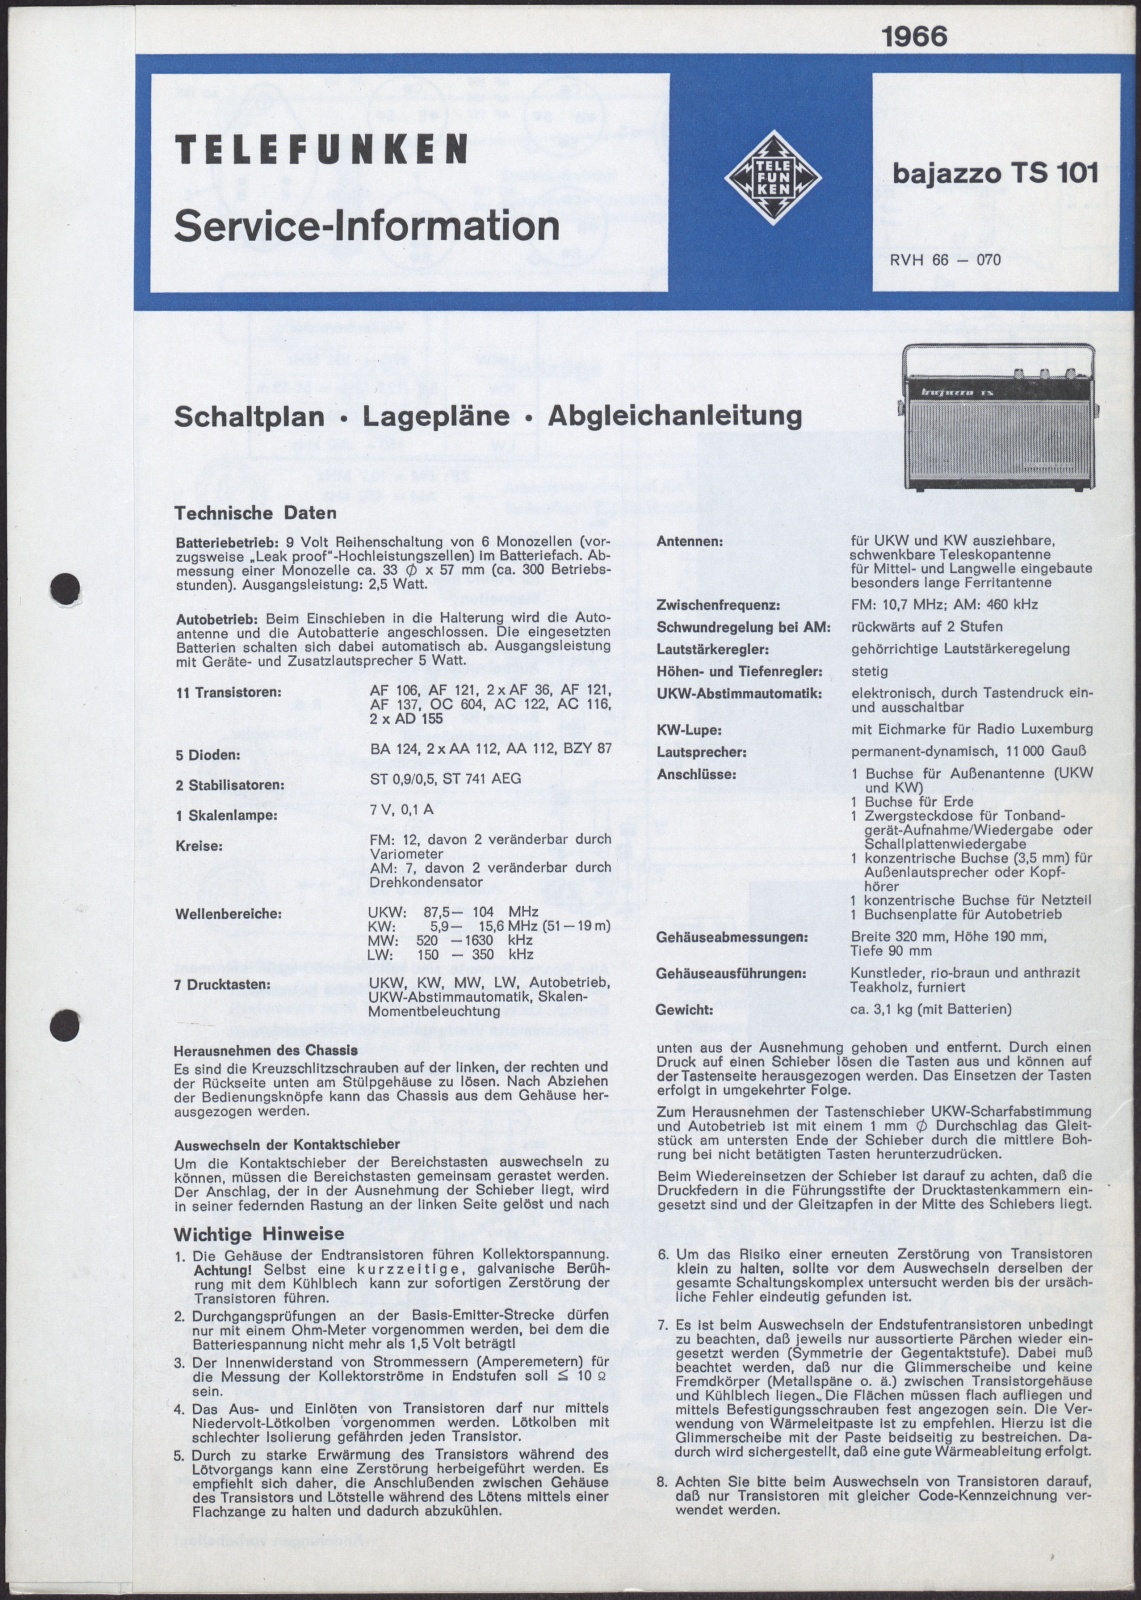 Bedienungsanleitung: Telefunken Service-Information; Telefunken bajazzo TS 101 (Stiftung Deutsches Technikmuseum Berlin CC0)